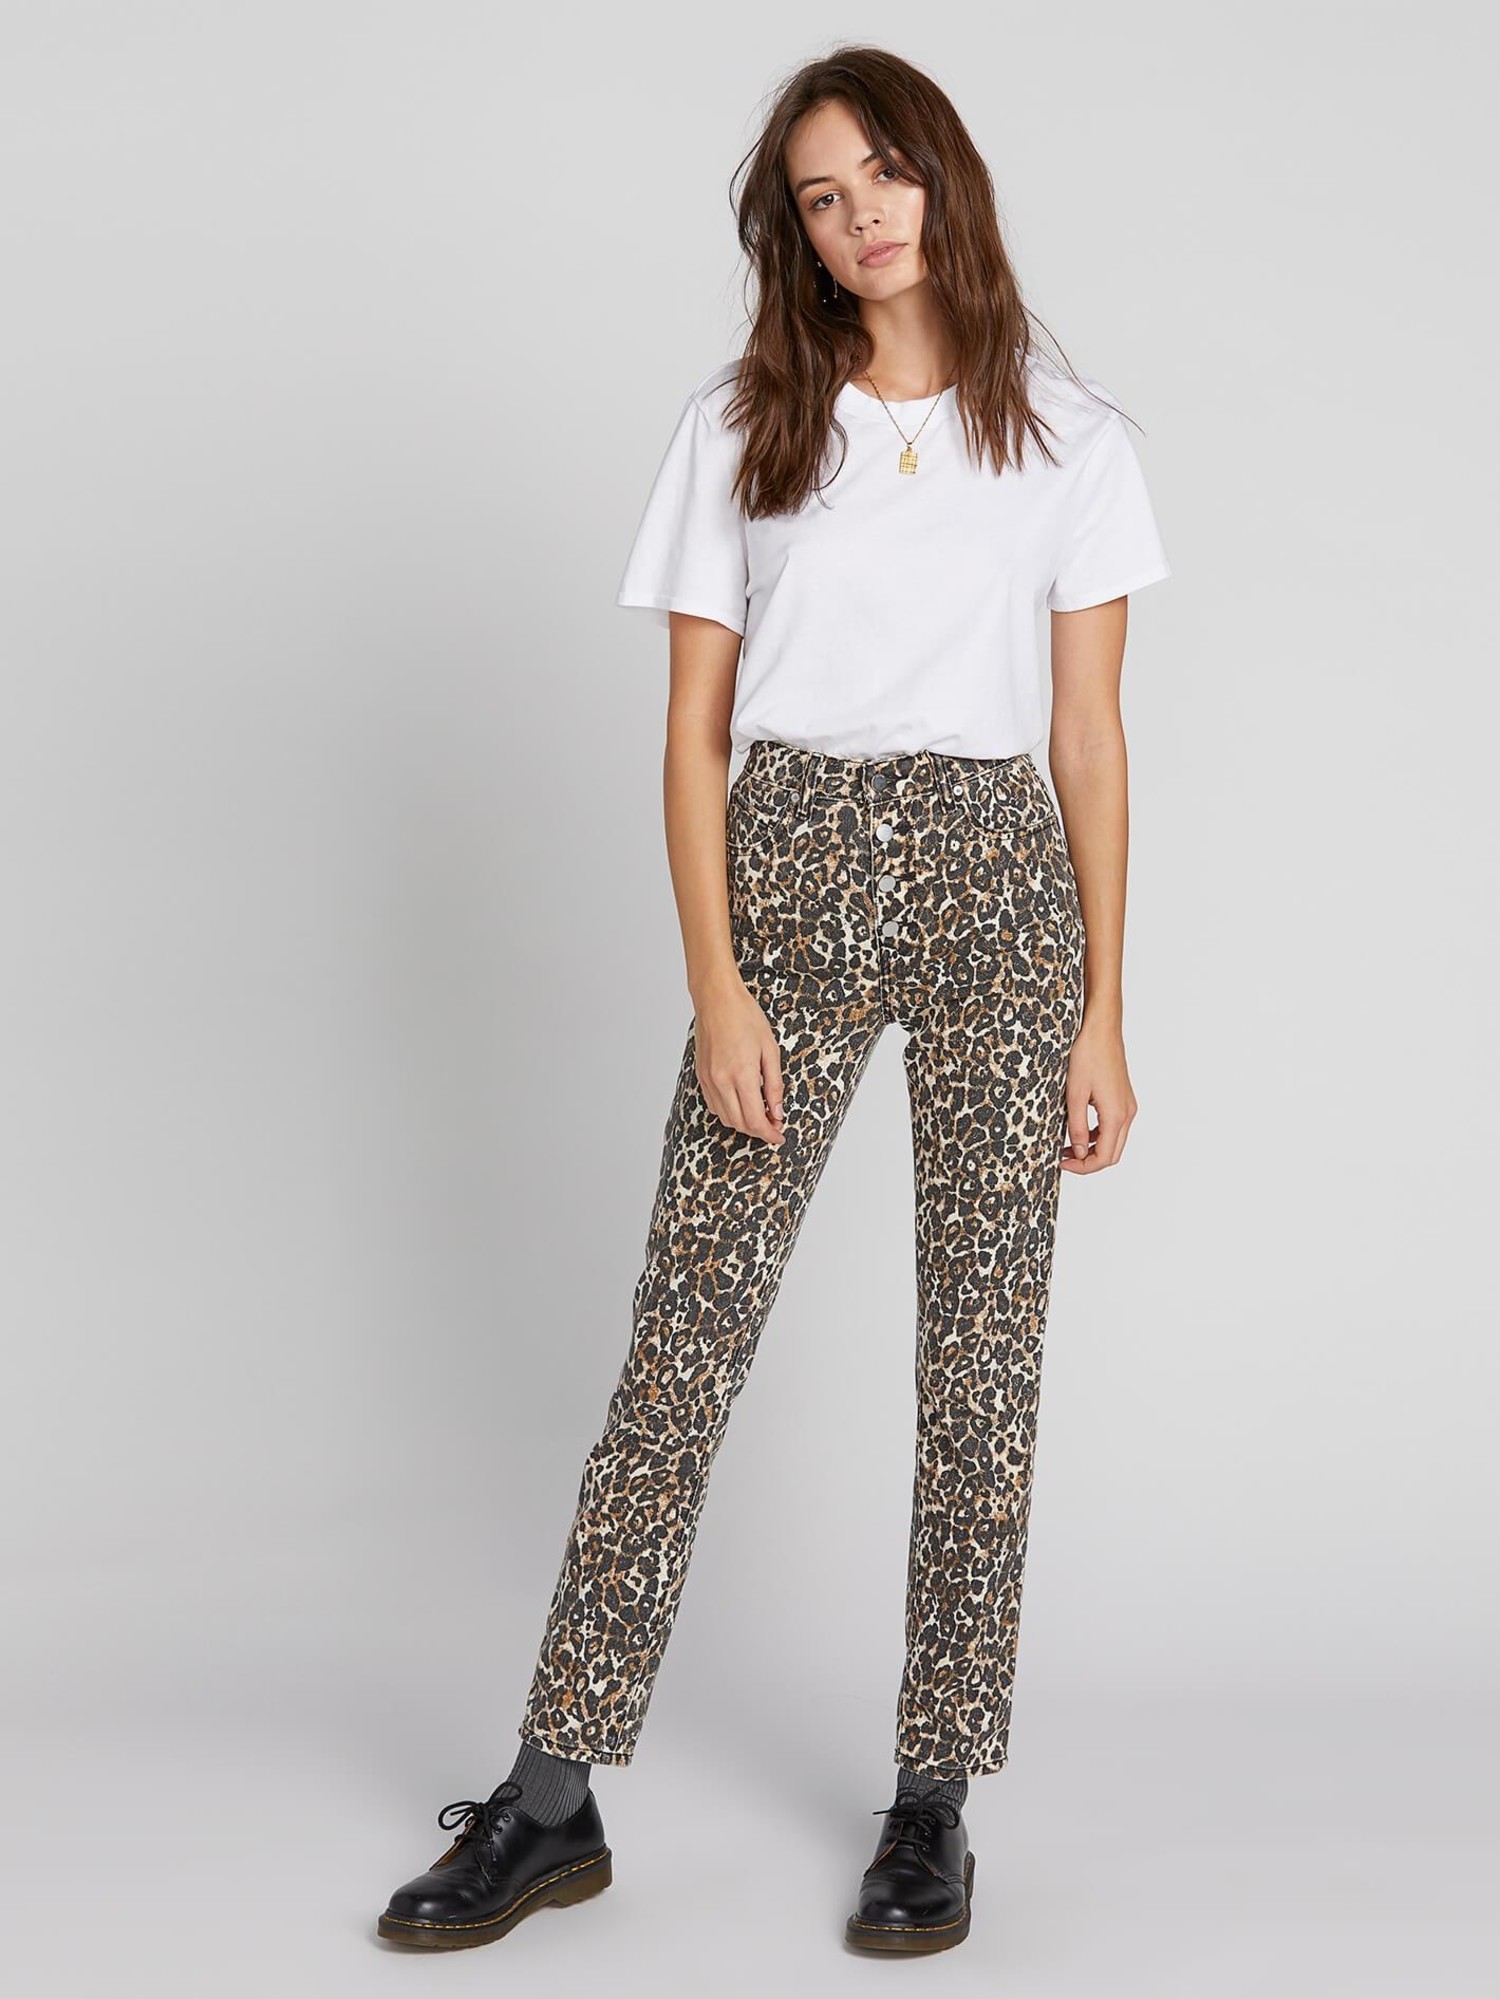 Zara leopard print jeans - Gem